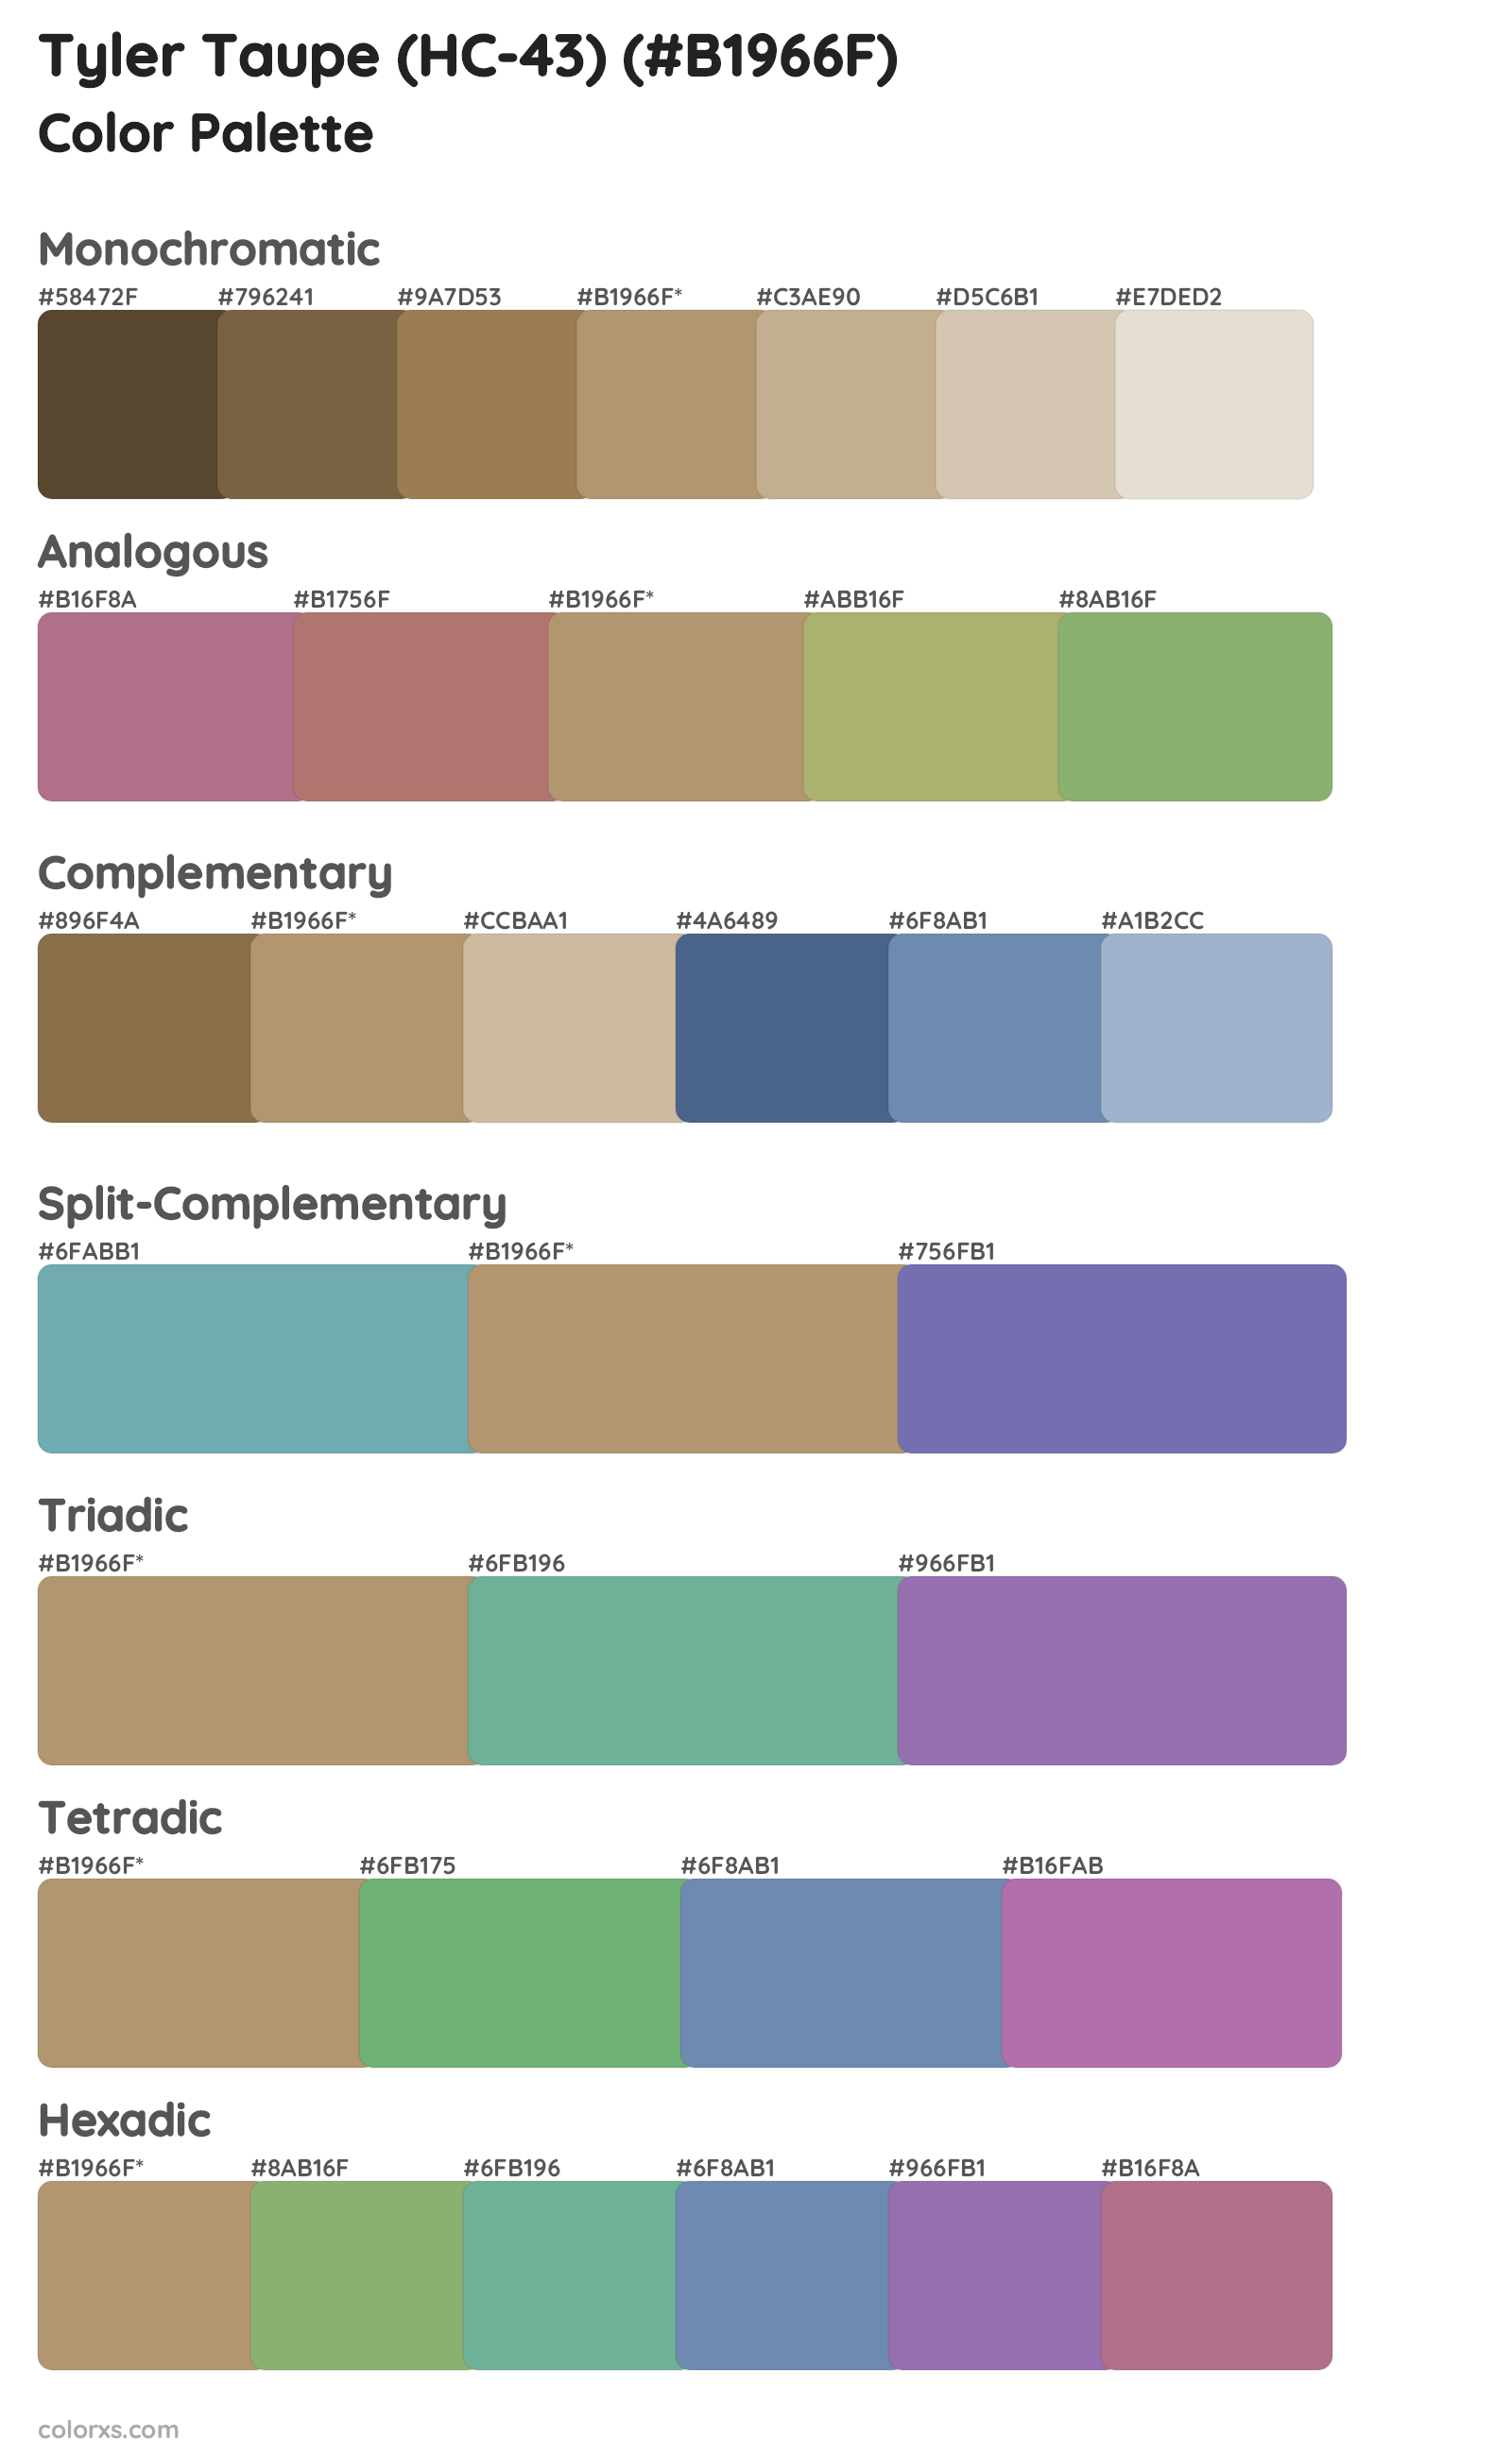 Tyler Taupe (HC-43) Color Scheme Palettes